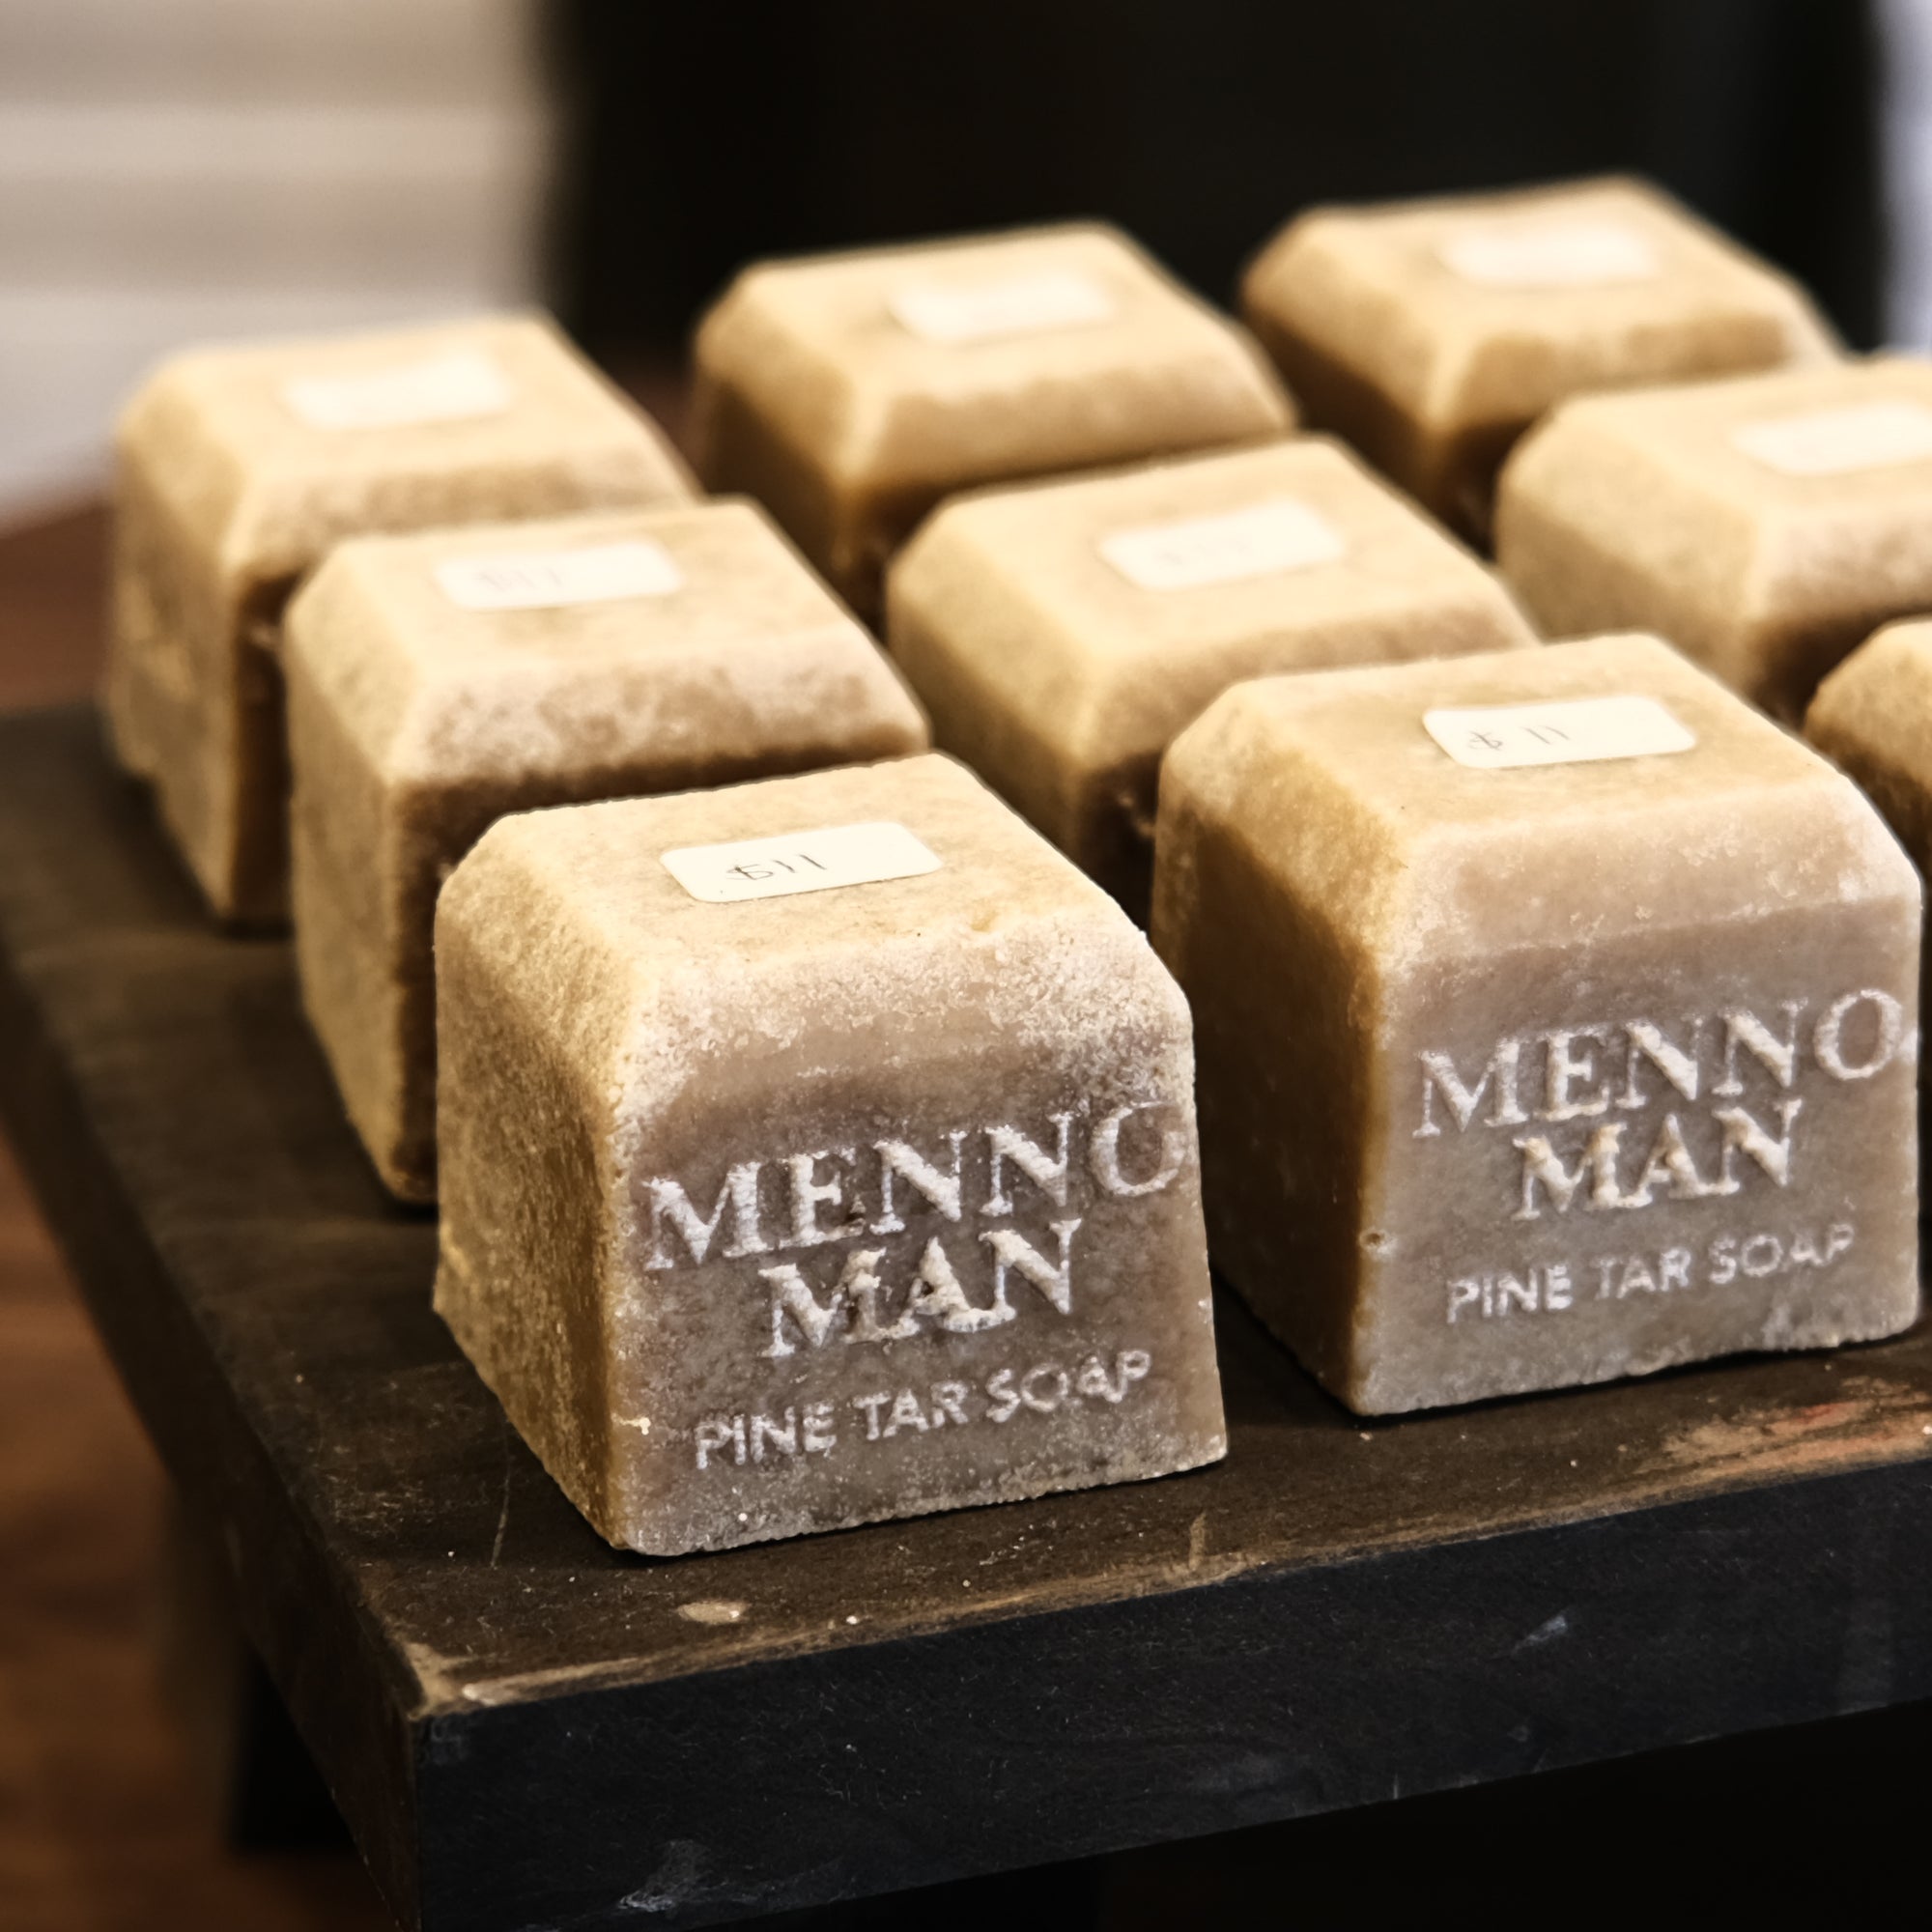 Menno Man Pine Tar Soap Menno Man Curt + Myr Co. Mennonite Store, La Crete, Alberta, Canada